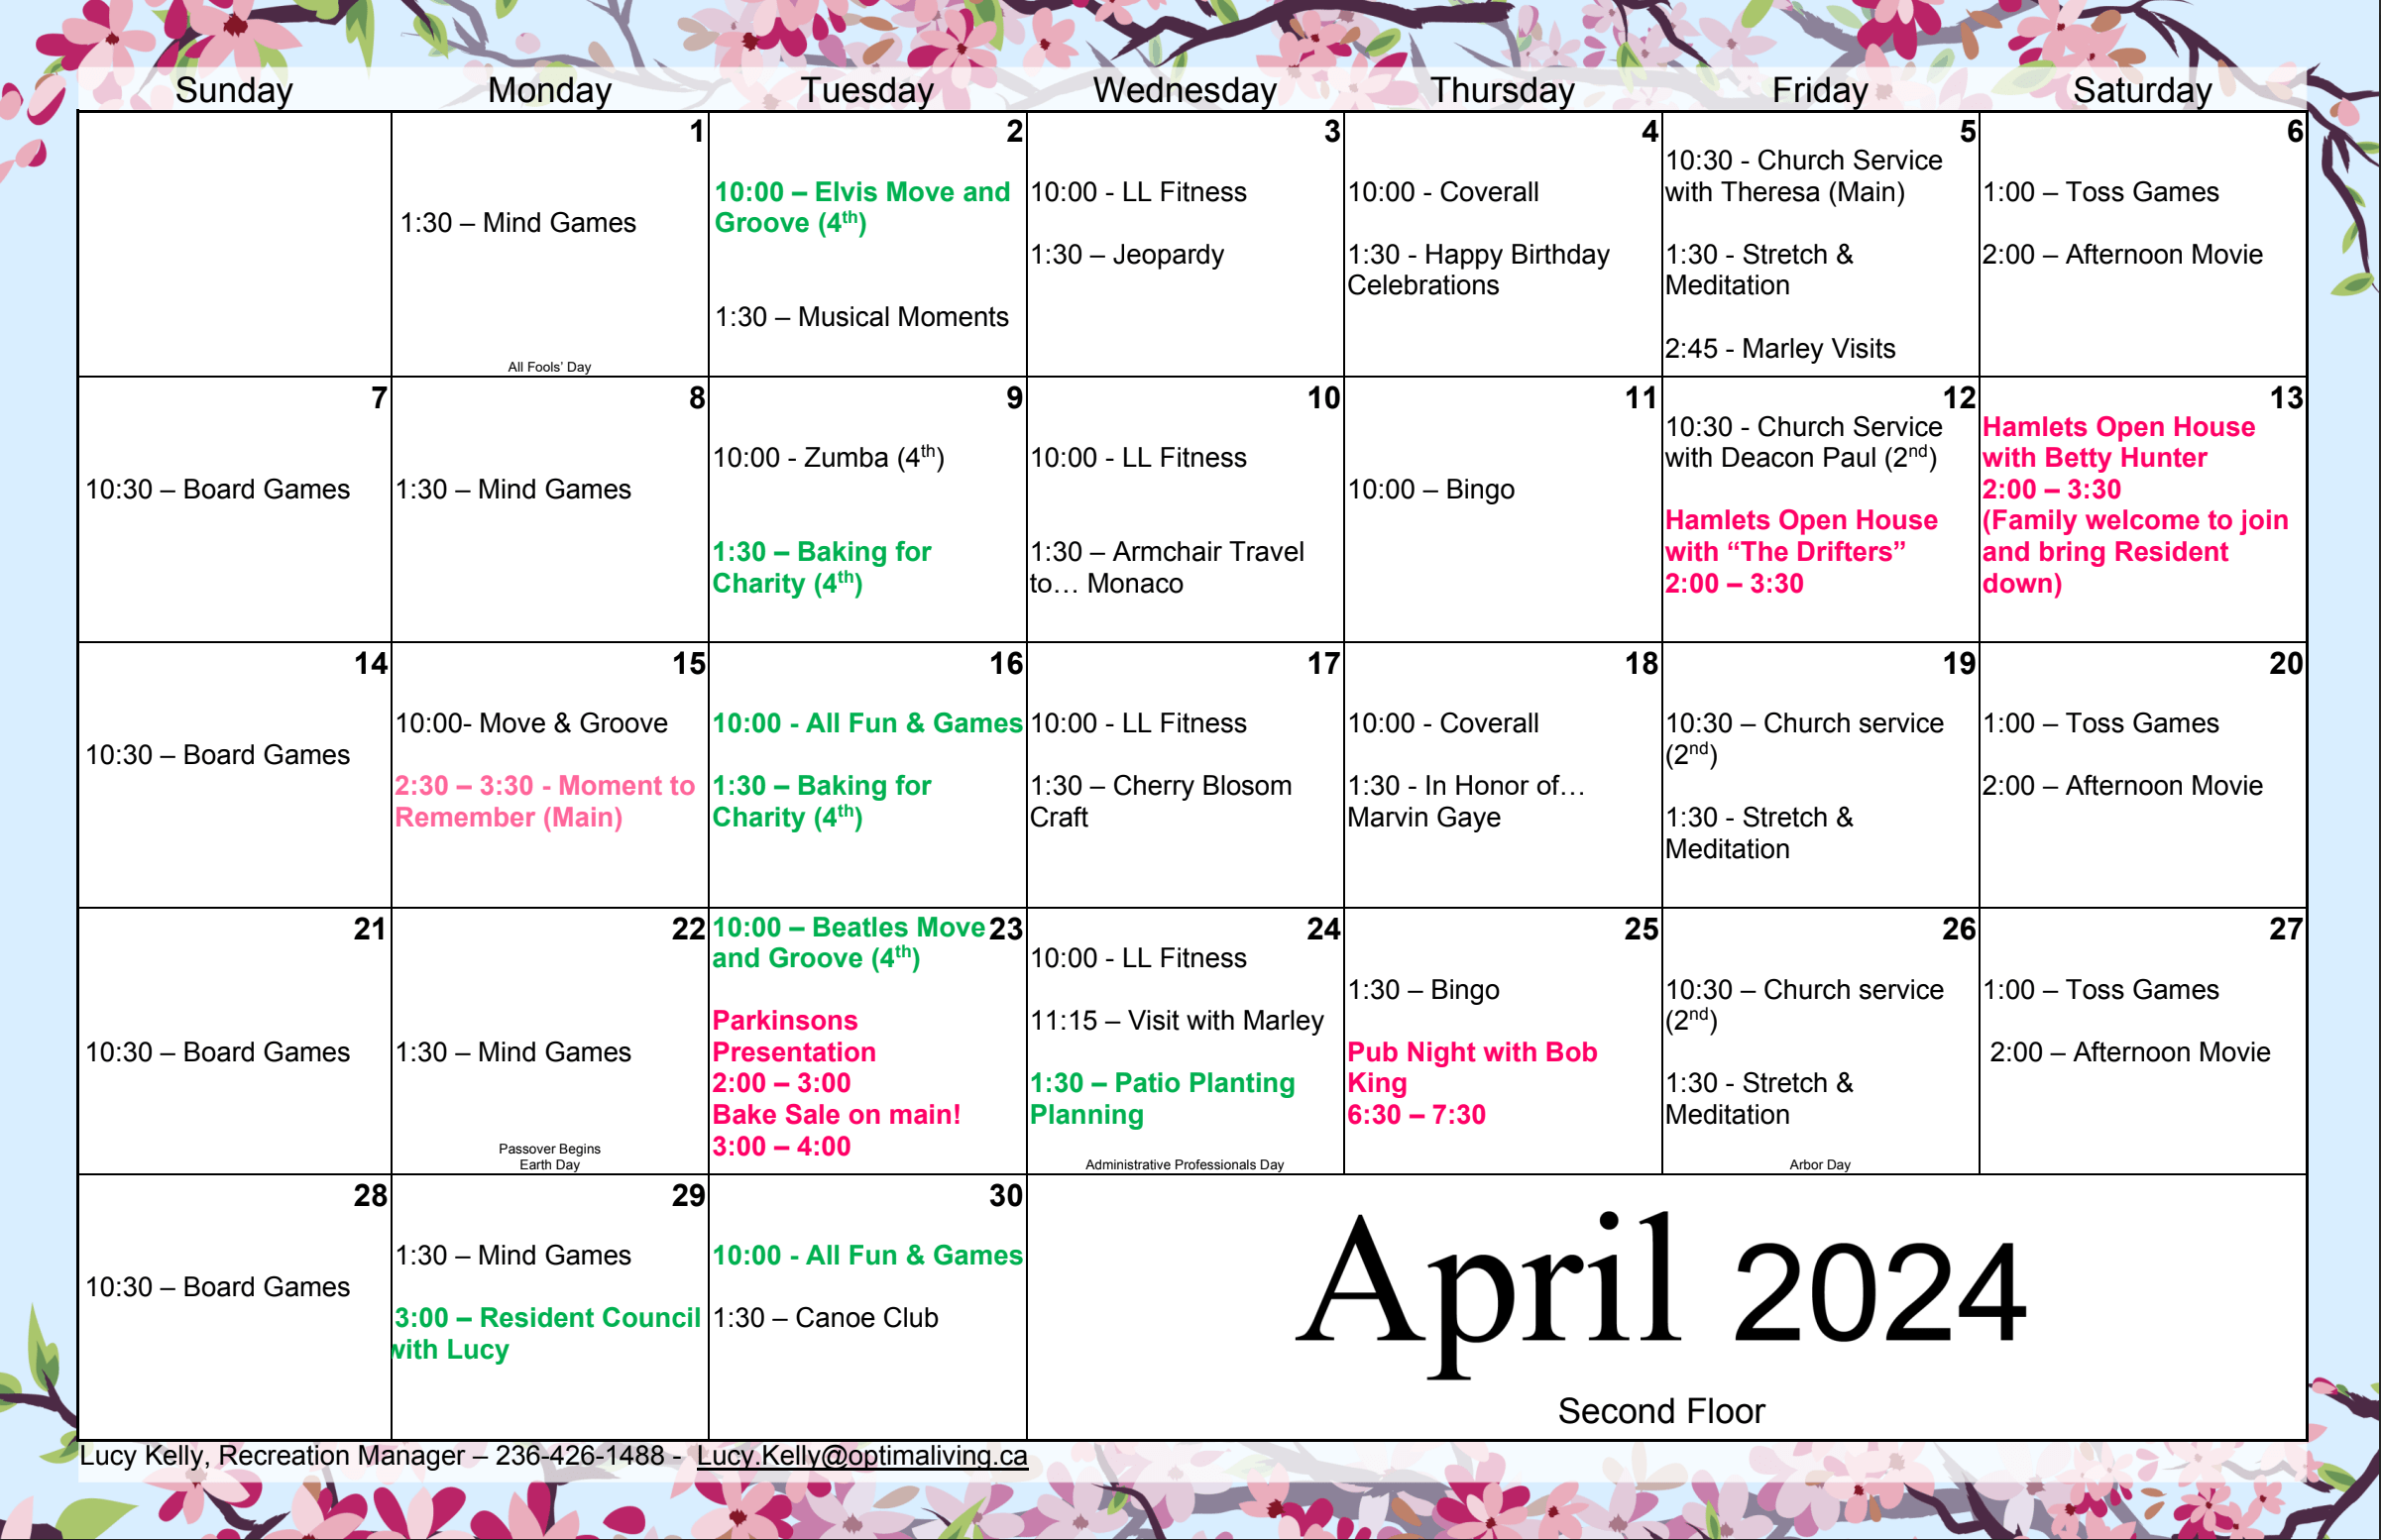 The Hamlets at Vernon April 2024 Second Floor event calendar